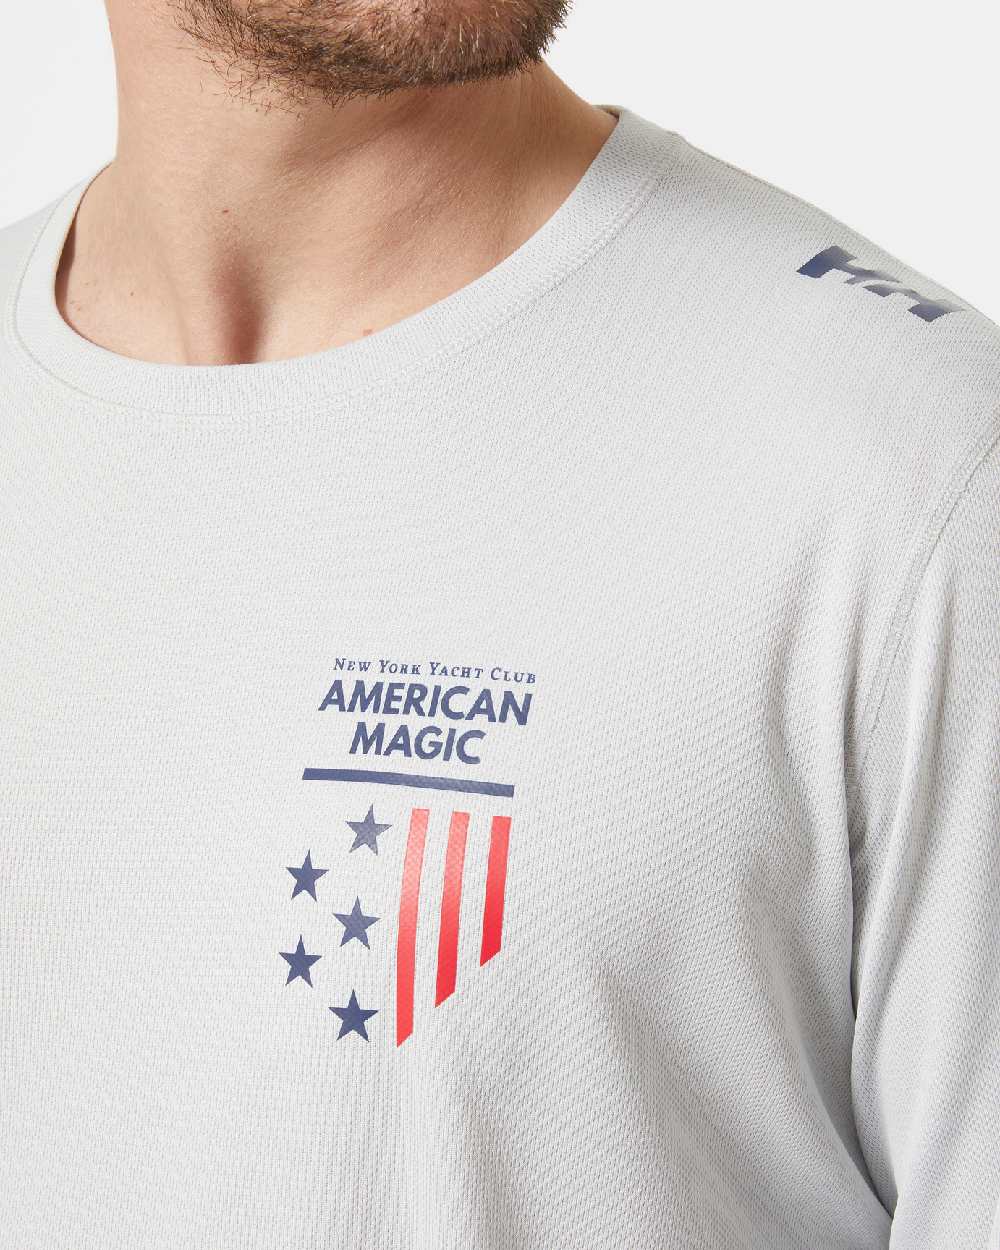 AM Grey Fog coloured Helly Hansen American Magic Technical Crew Long Sleeve Shirt on grey background 